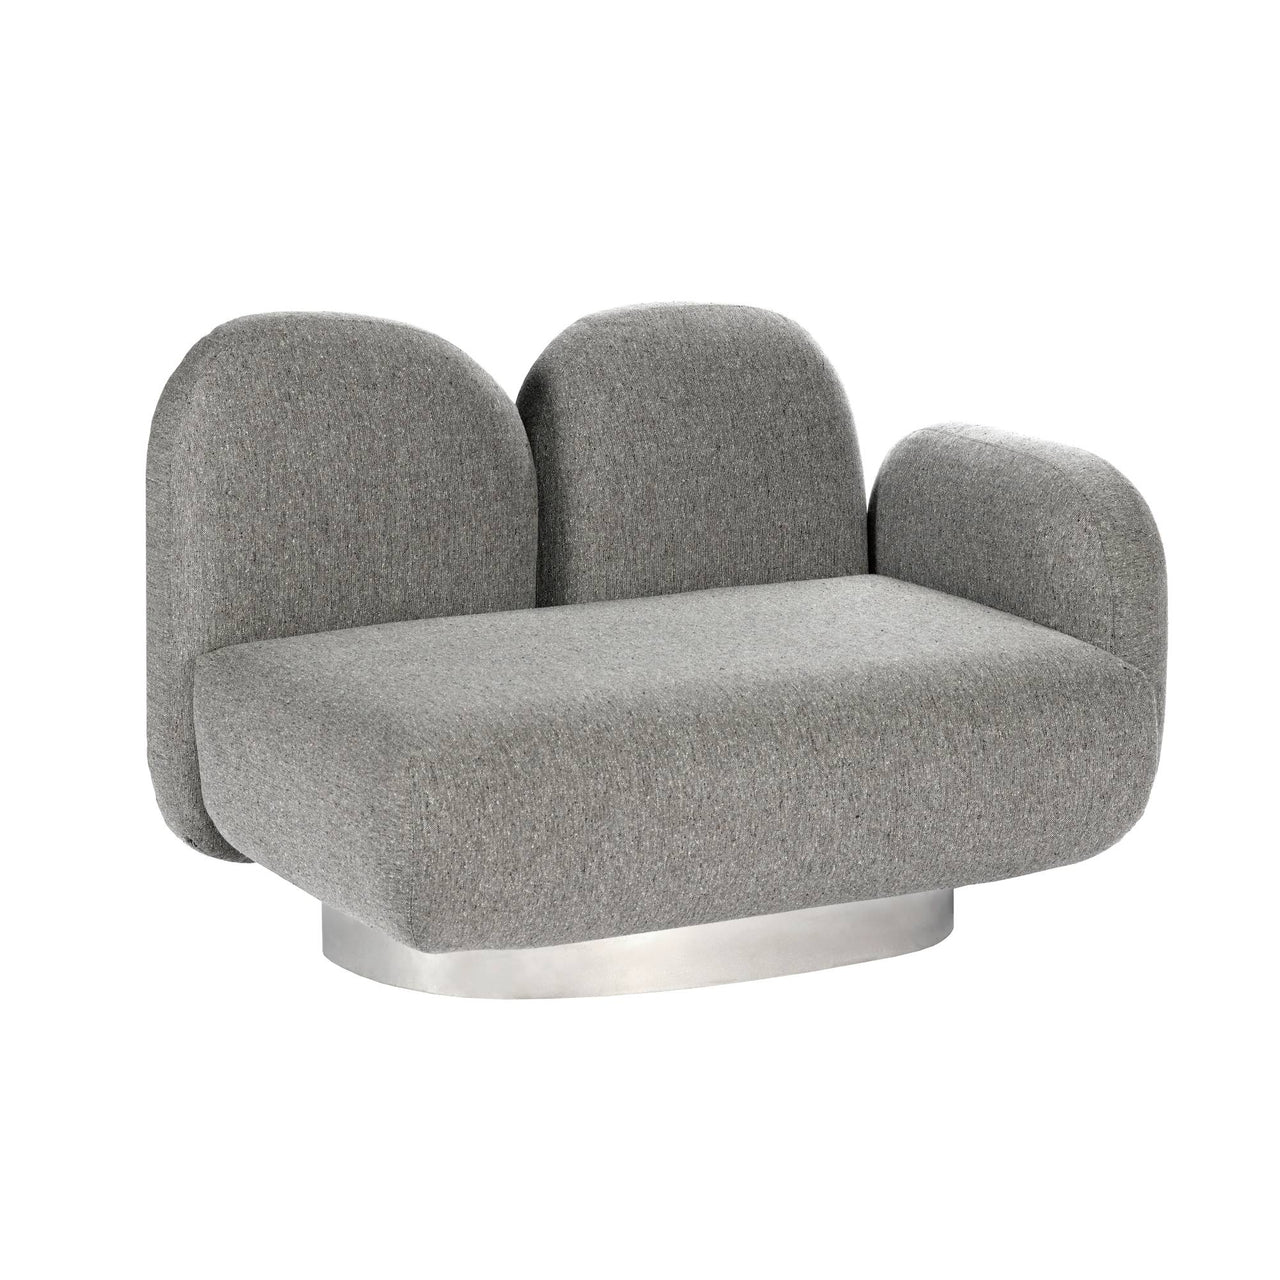 Assemble 1 Seat Sofa: Sevo Grey + With Left Arm